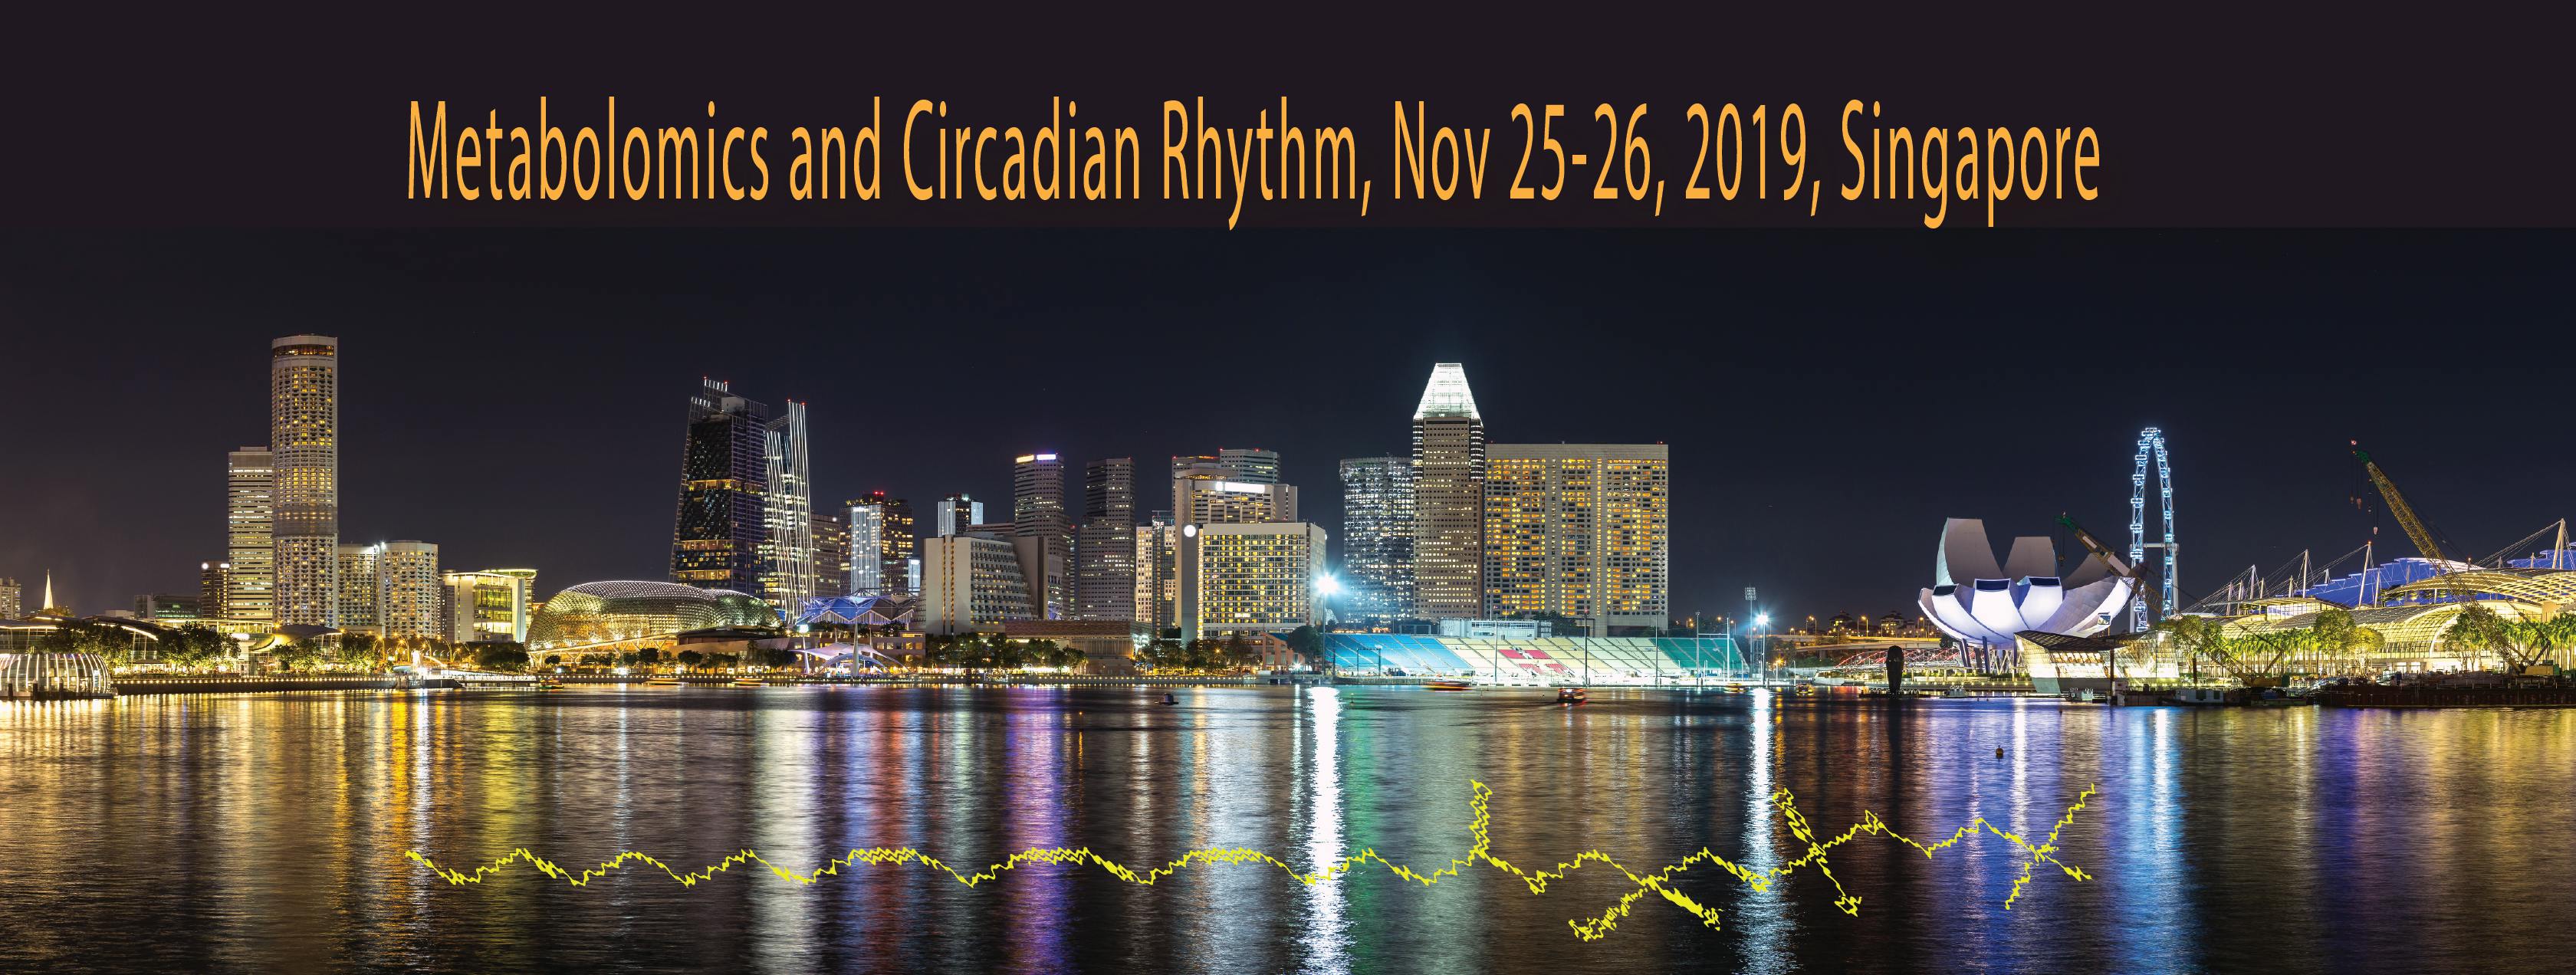 Symposium on Metabolomics and Circadian Rhythm, November 25-26, 2019